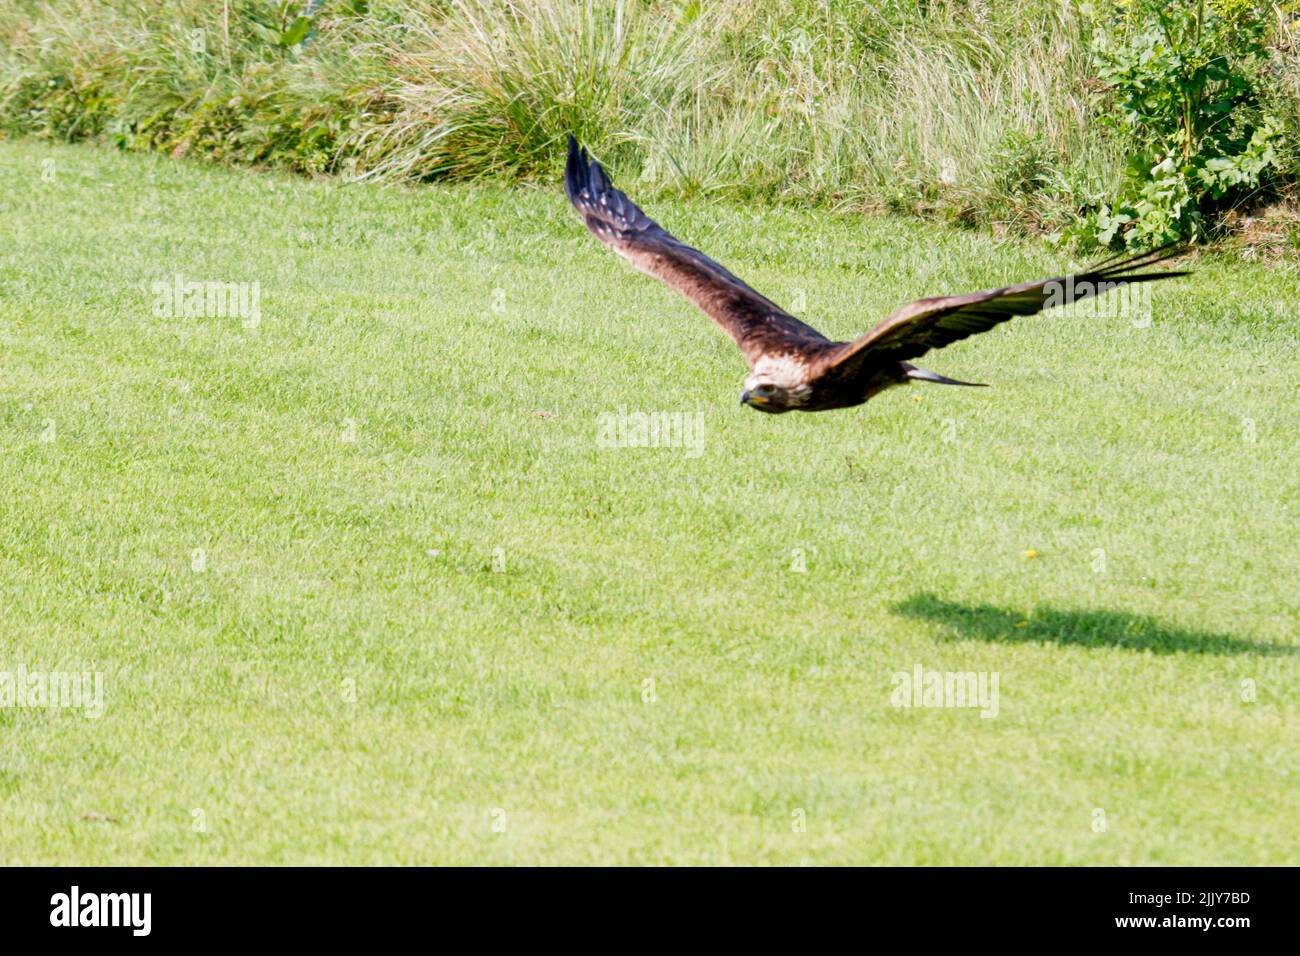 Un aigle d'or (Aquila chrysaetos) volant dans les airs. Banque D'Images